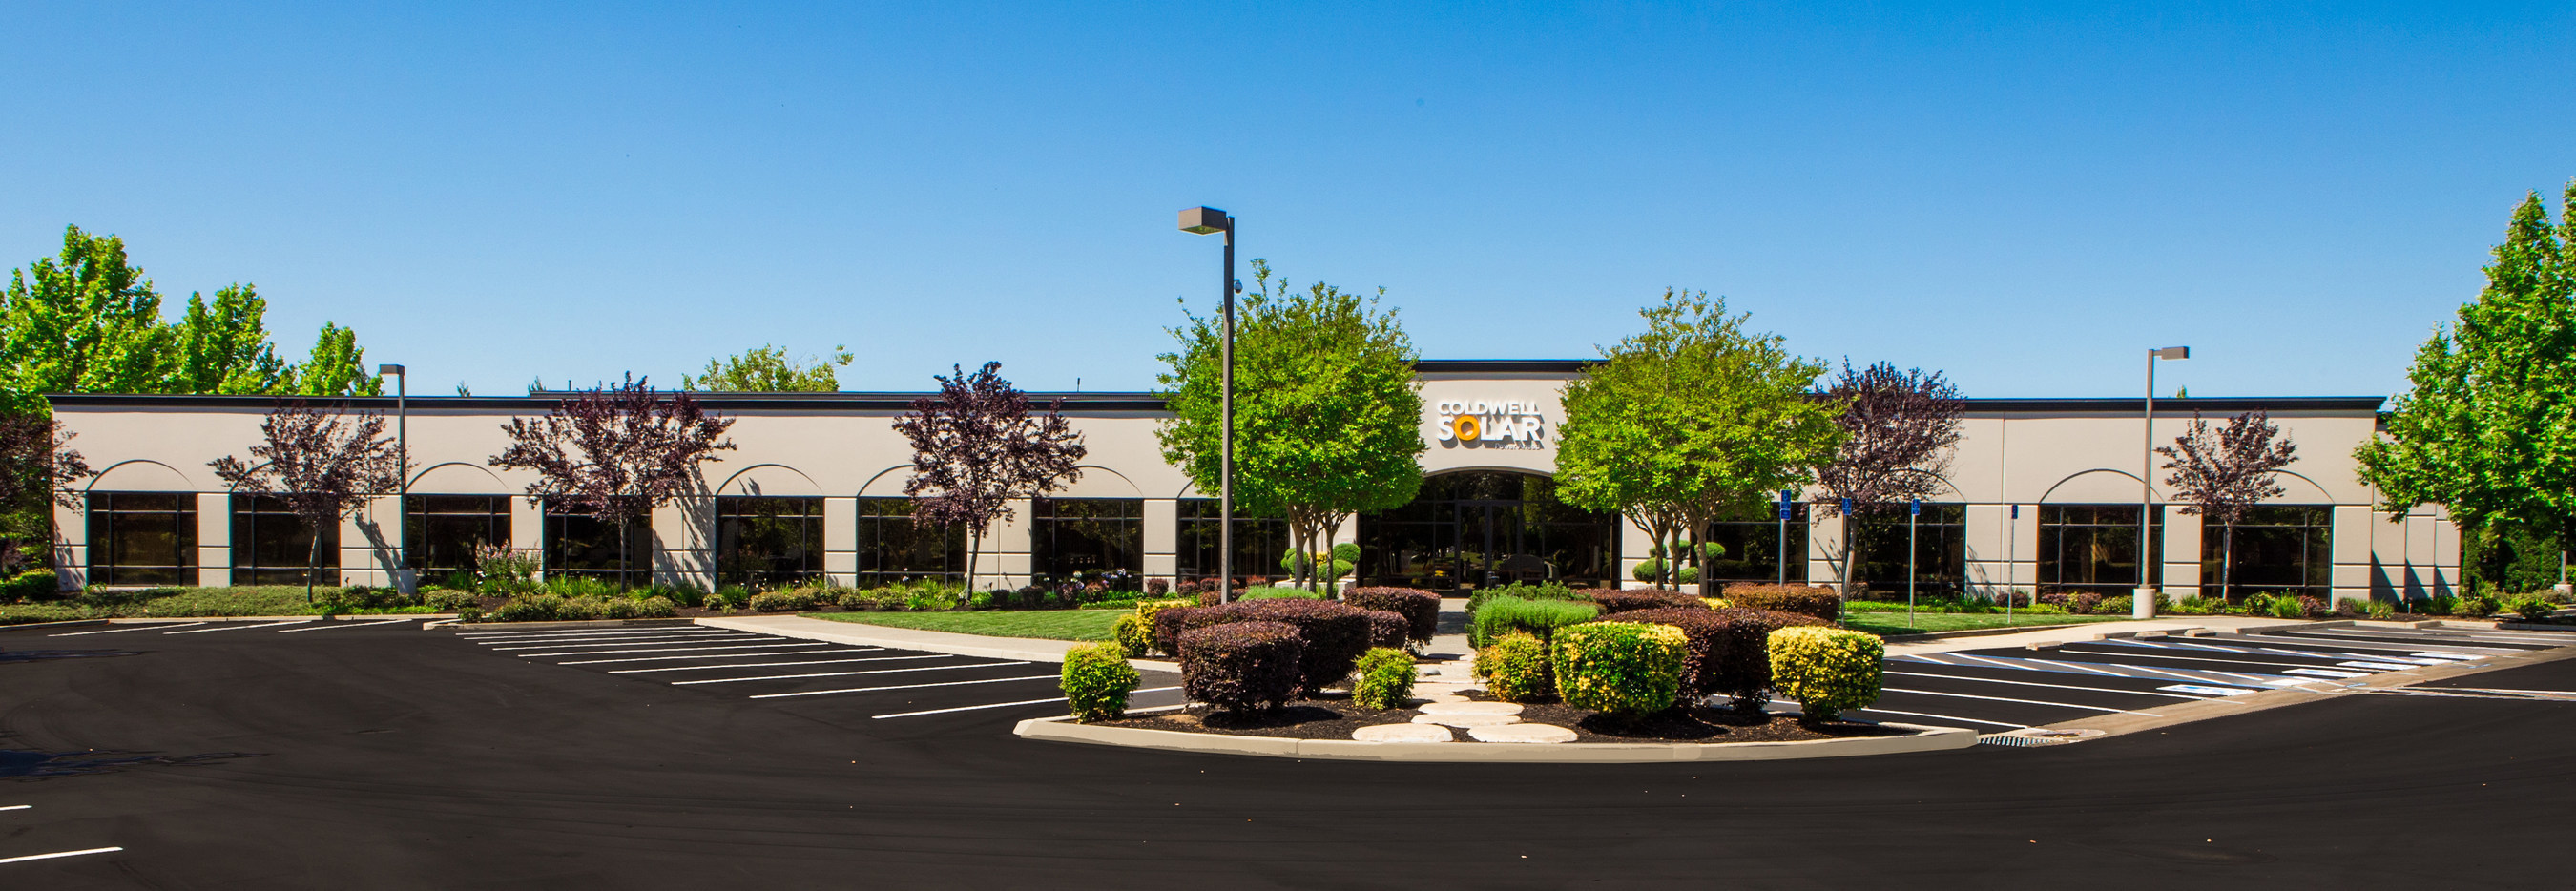 Coldwell Solar, Inc. New Headquarters in Rocklin, CA